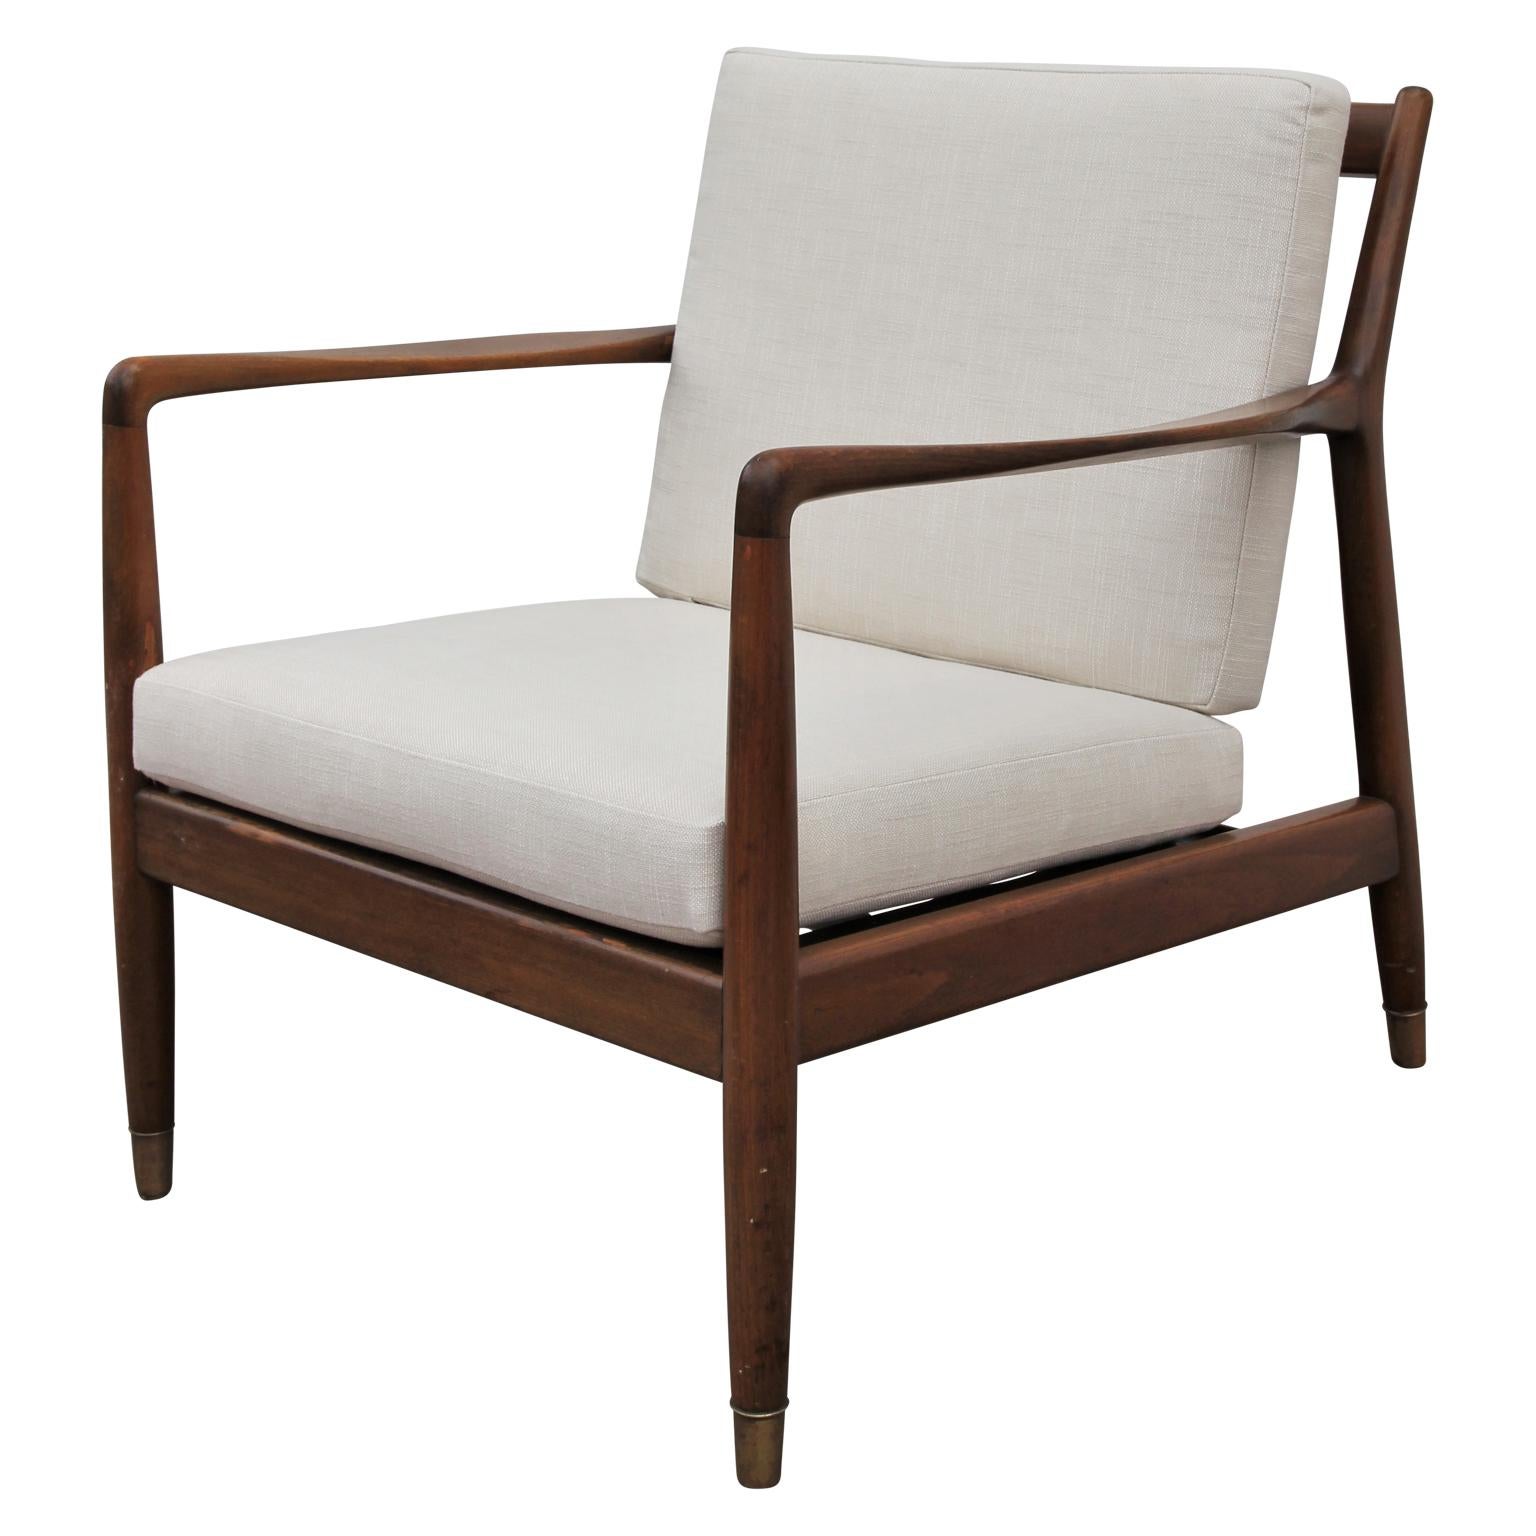 Swedish Folke Ohlsson Model 75-C Walnut Color Danish Modern Lounge Chair for DUX